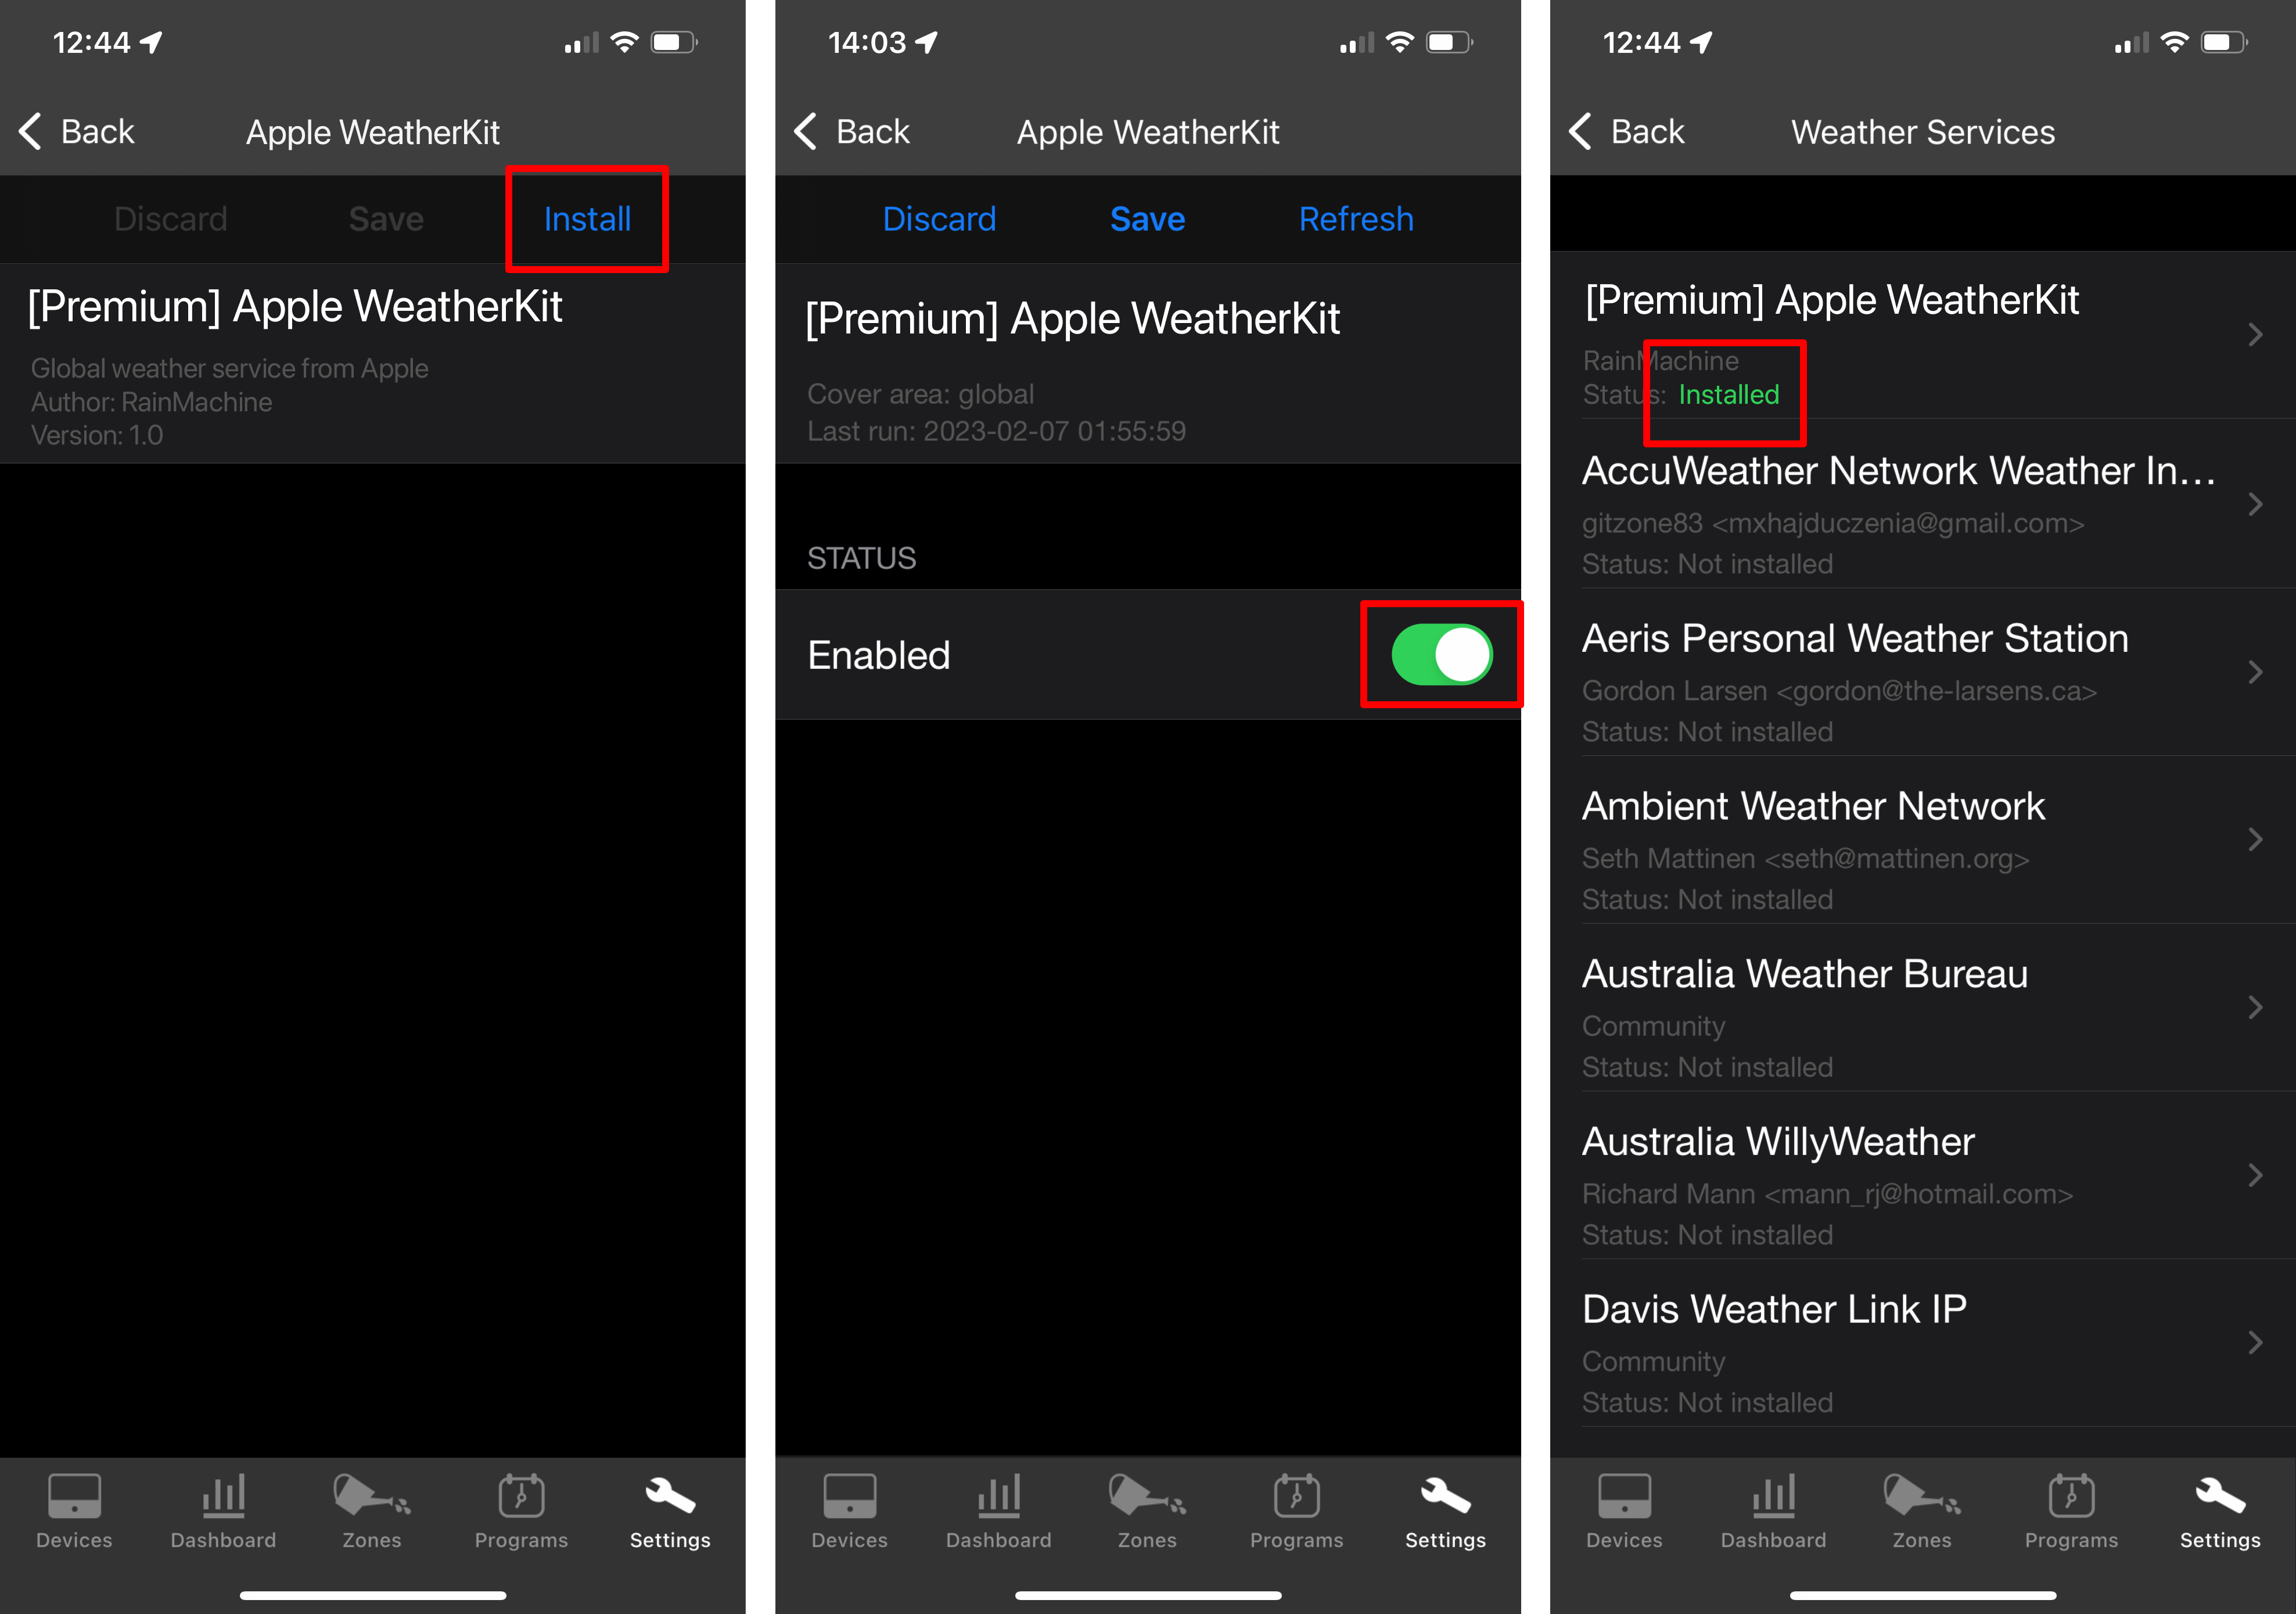 Apple WeatherKit RainMachine weather service installation screenshot of the RainMachine Apple iOS mobile app